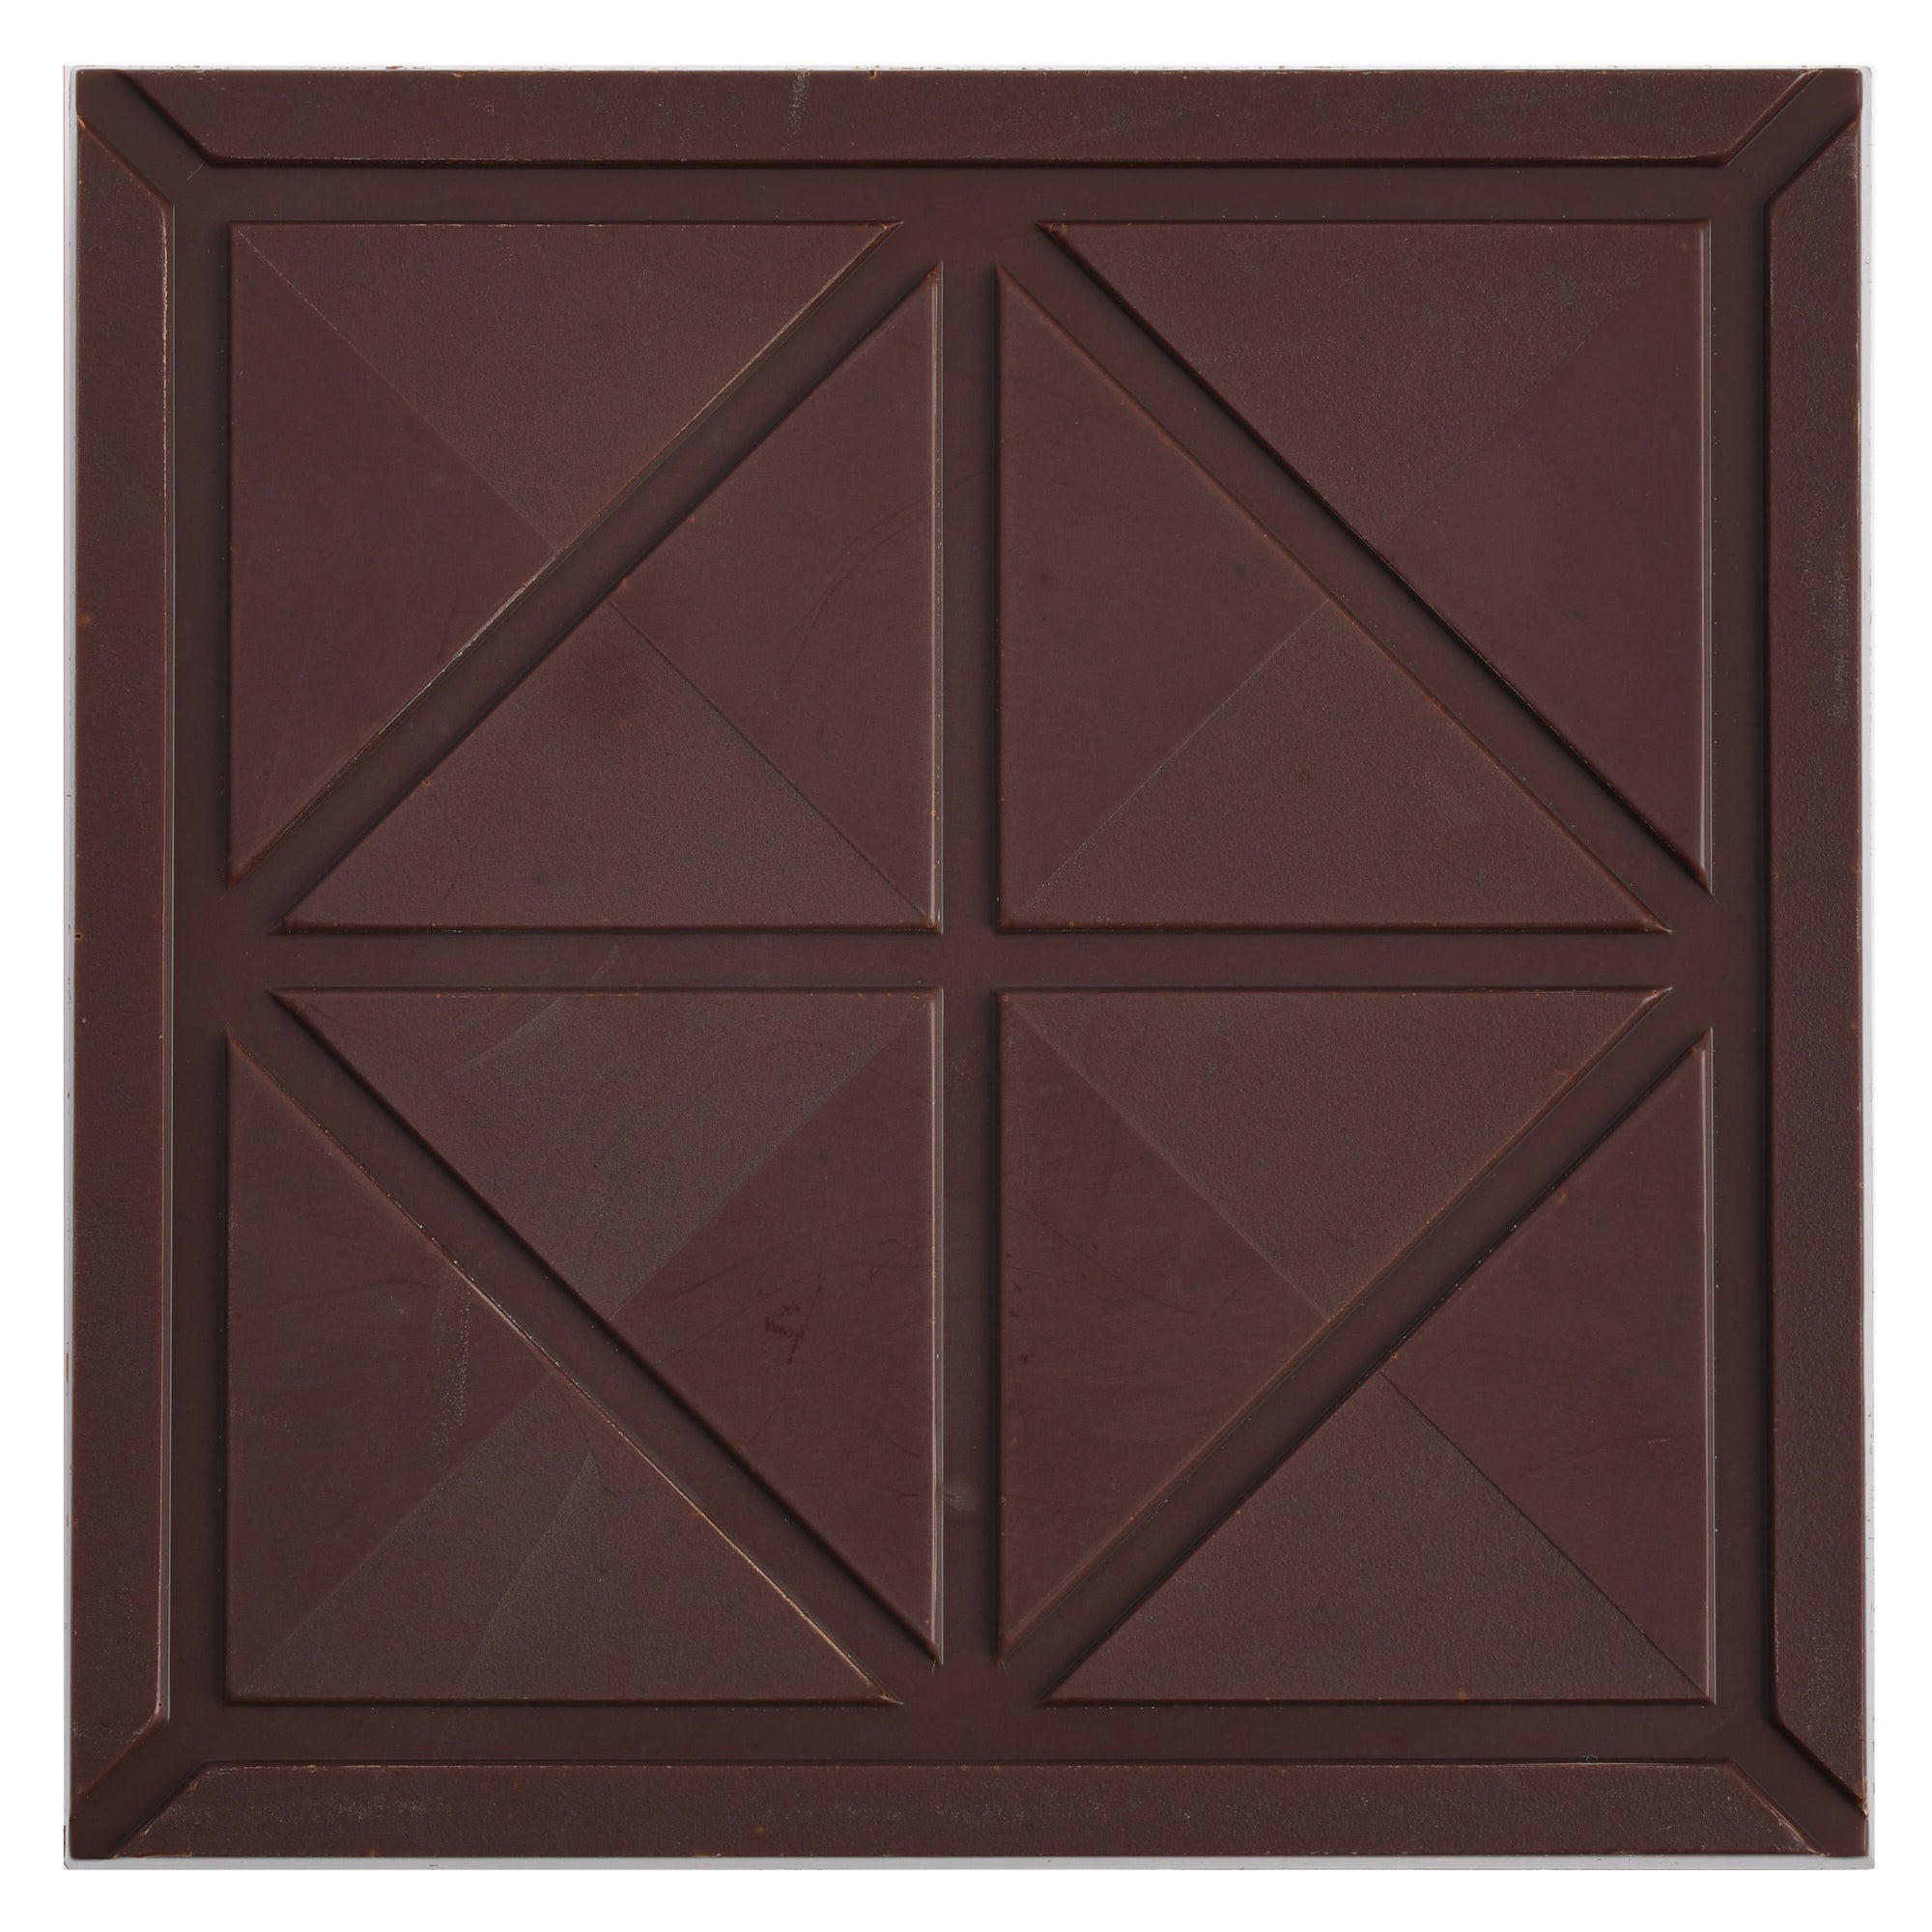 Costa Rica 85% dark chocolate tablet